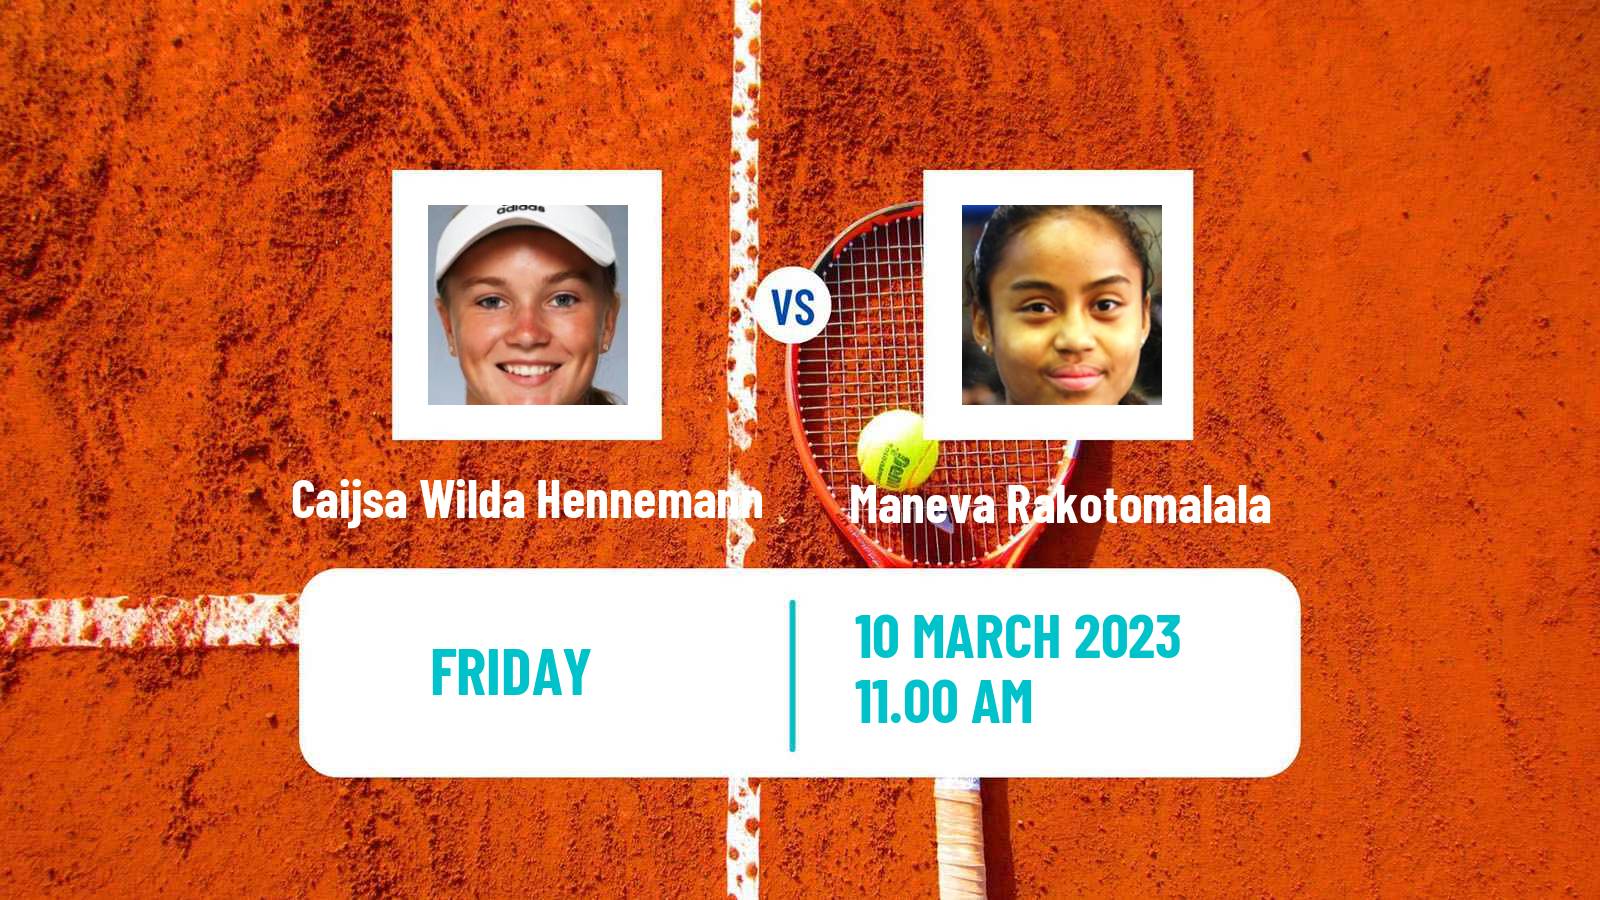 Tennis ITF Tournaments Caijsa Wilda Hennemann - Maneva Rakotomalala